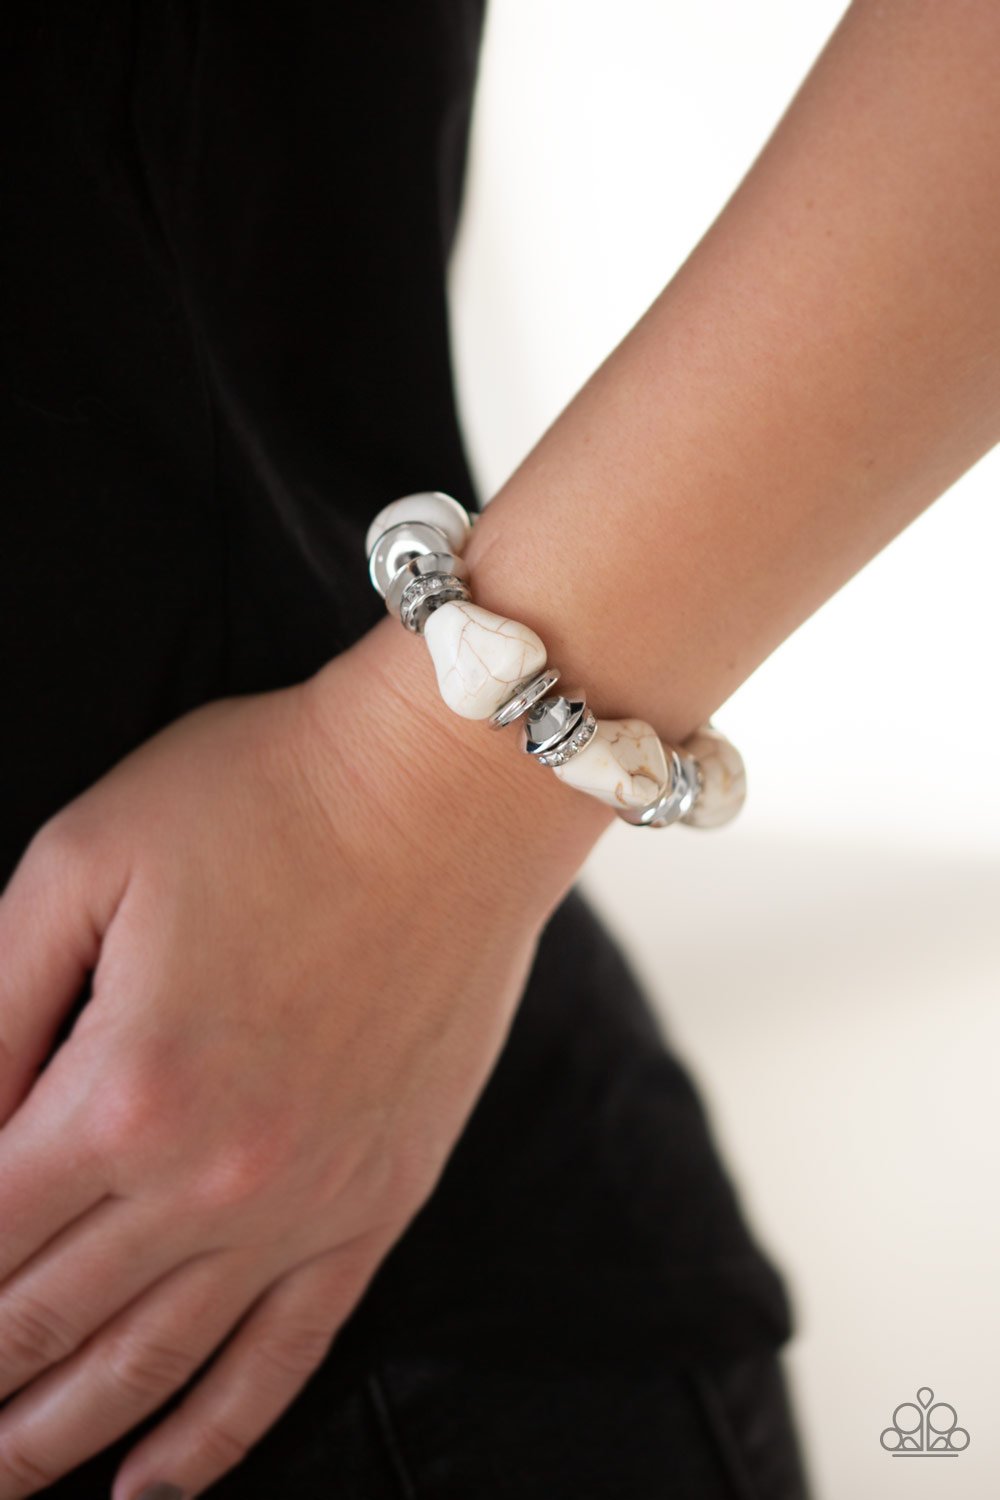 Stunningly Stone Age - White necklace w/ matching bracelet